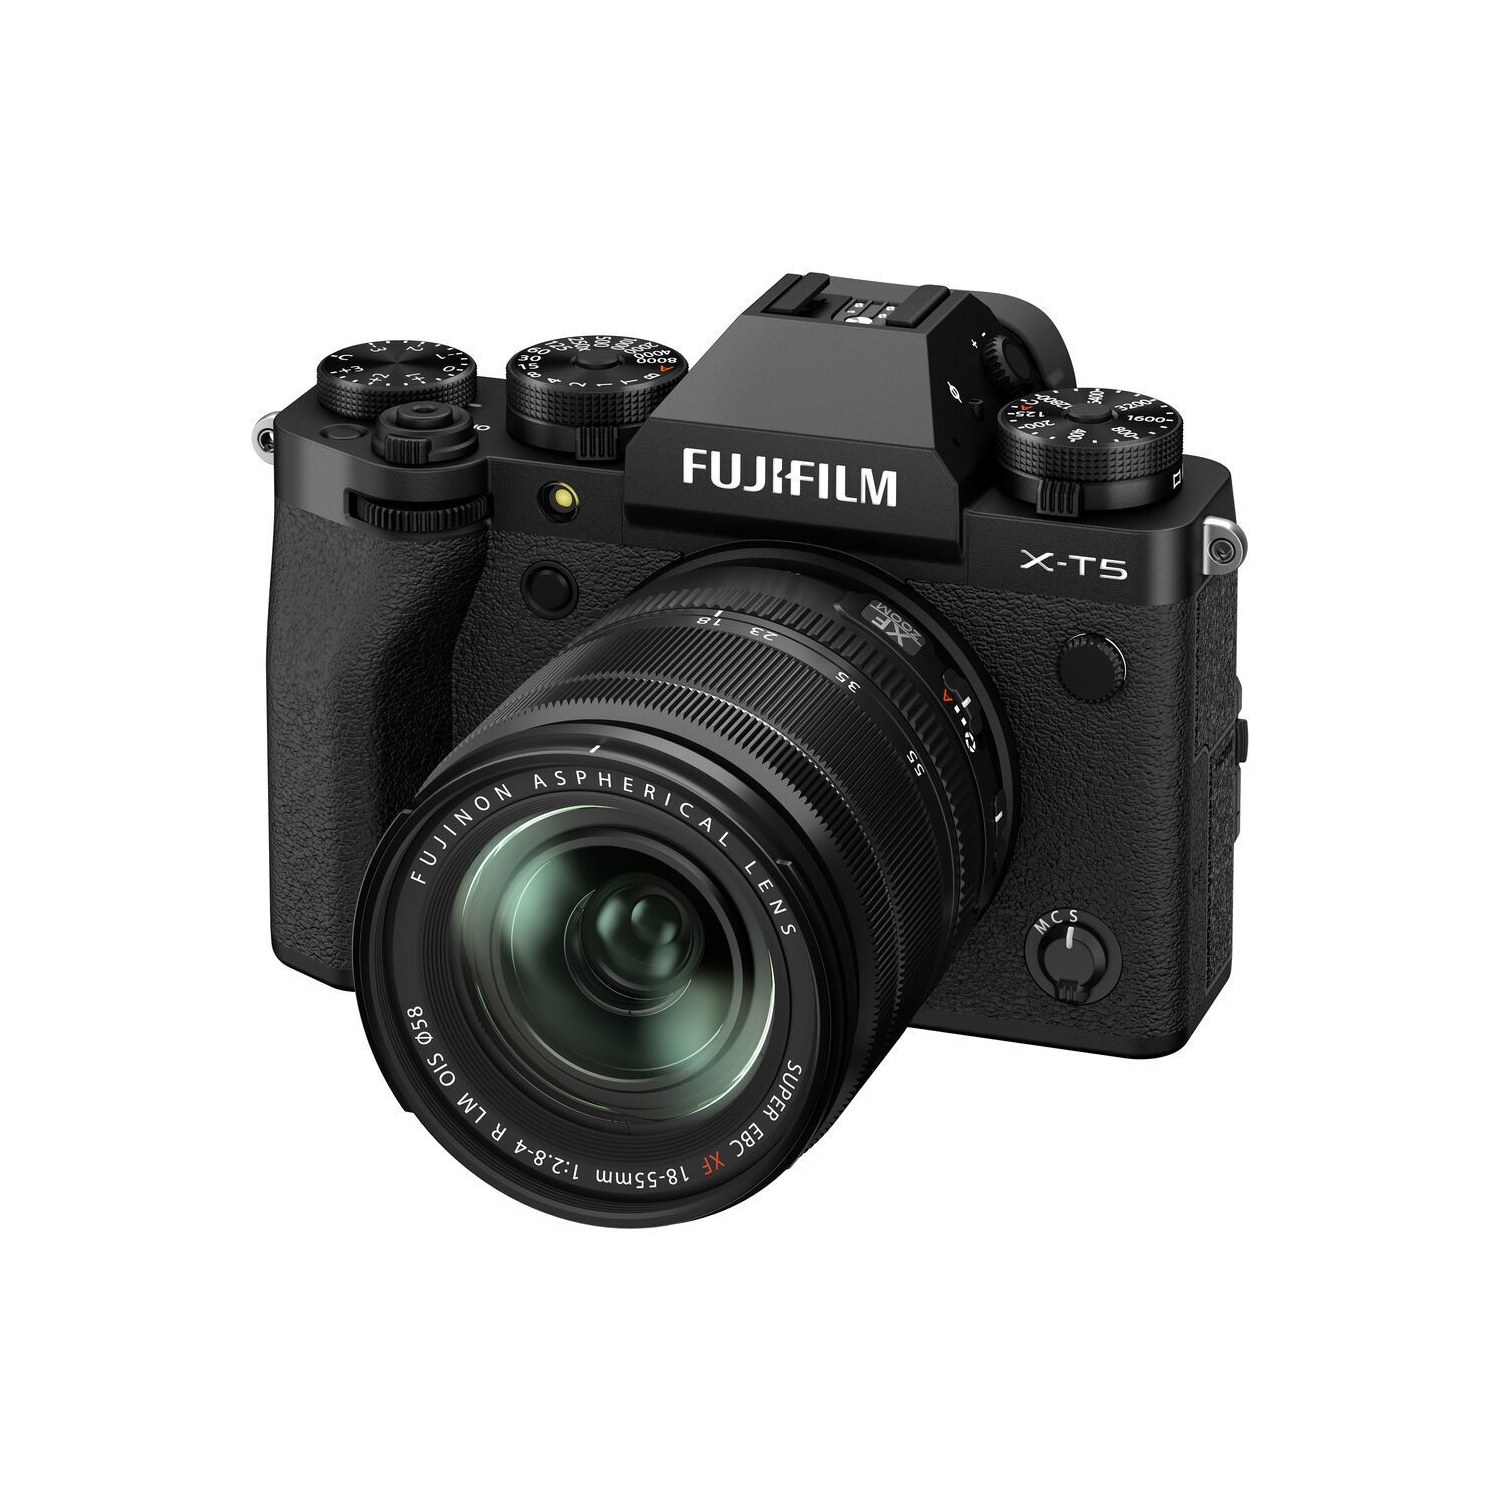 FUJIFILM X-T5 Mirrorless Camera and 18-55mm Lens (Black) - 16783082